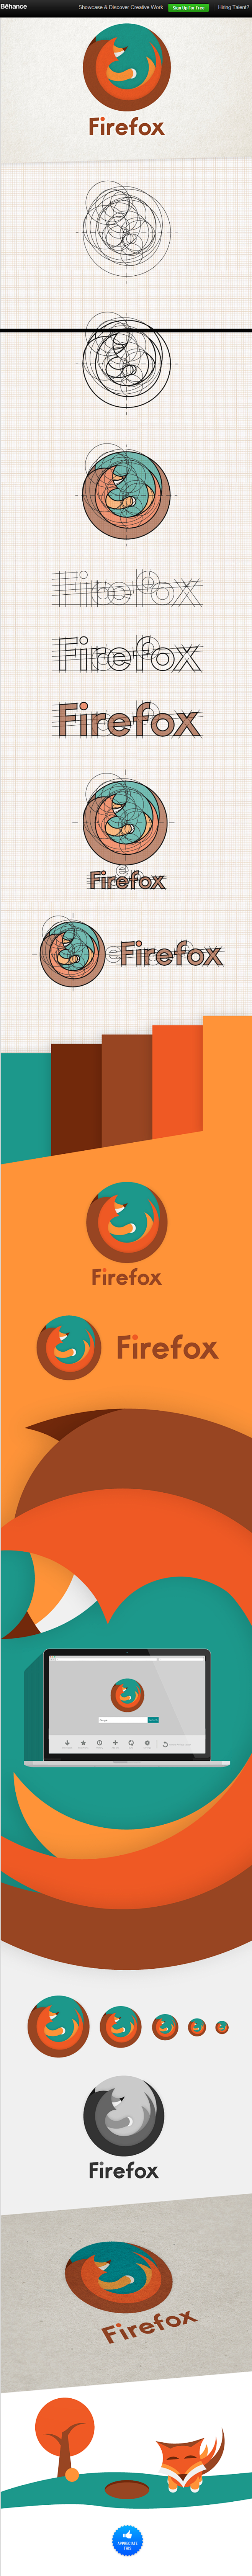 Unofficial Firefox F...